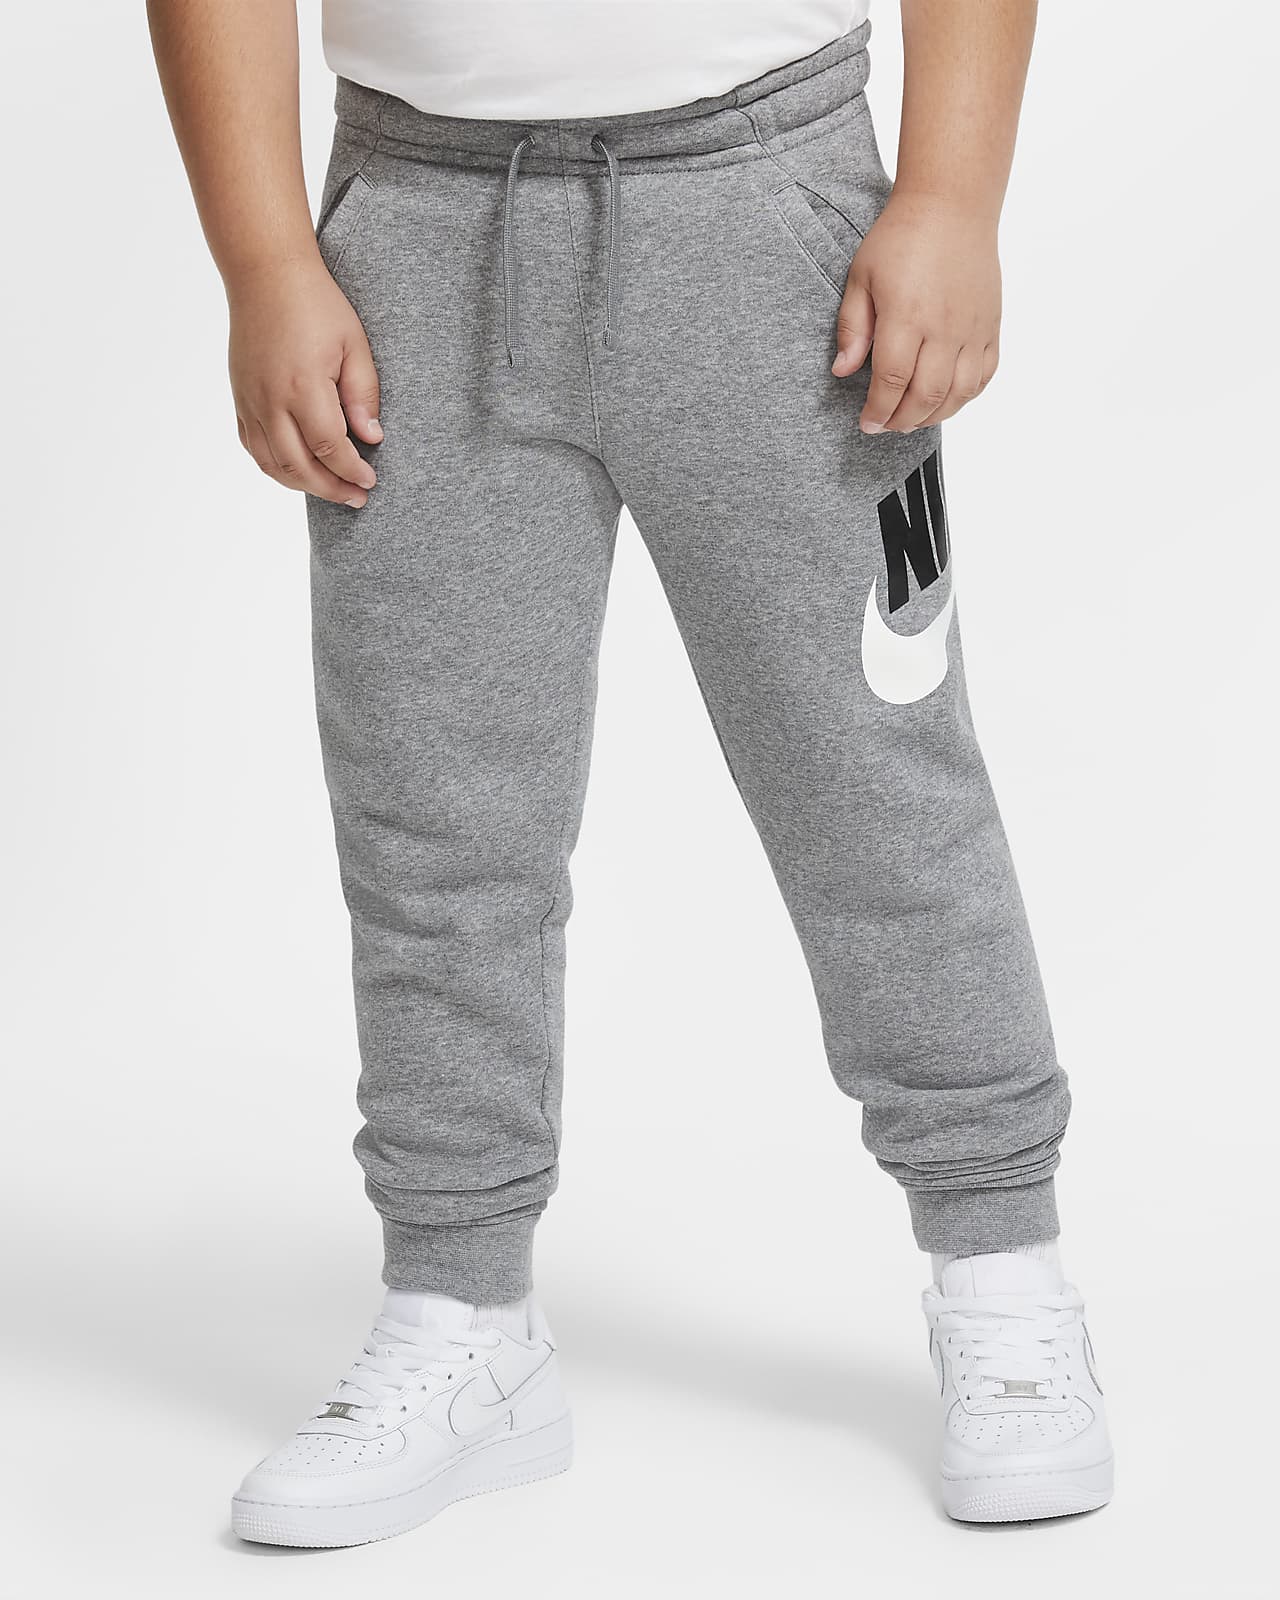 Calças Nike Sportswear Club Fleece Júnior (rapaz) (tamanhos grandes)